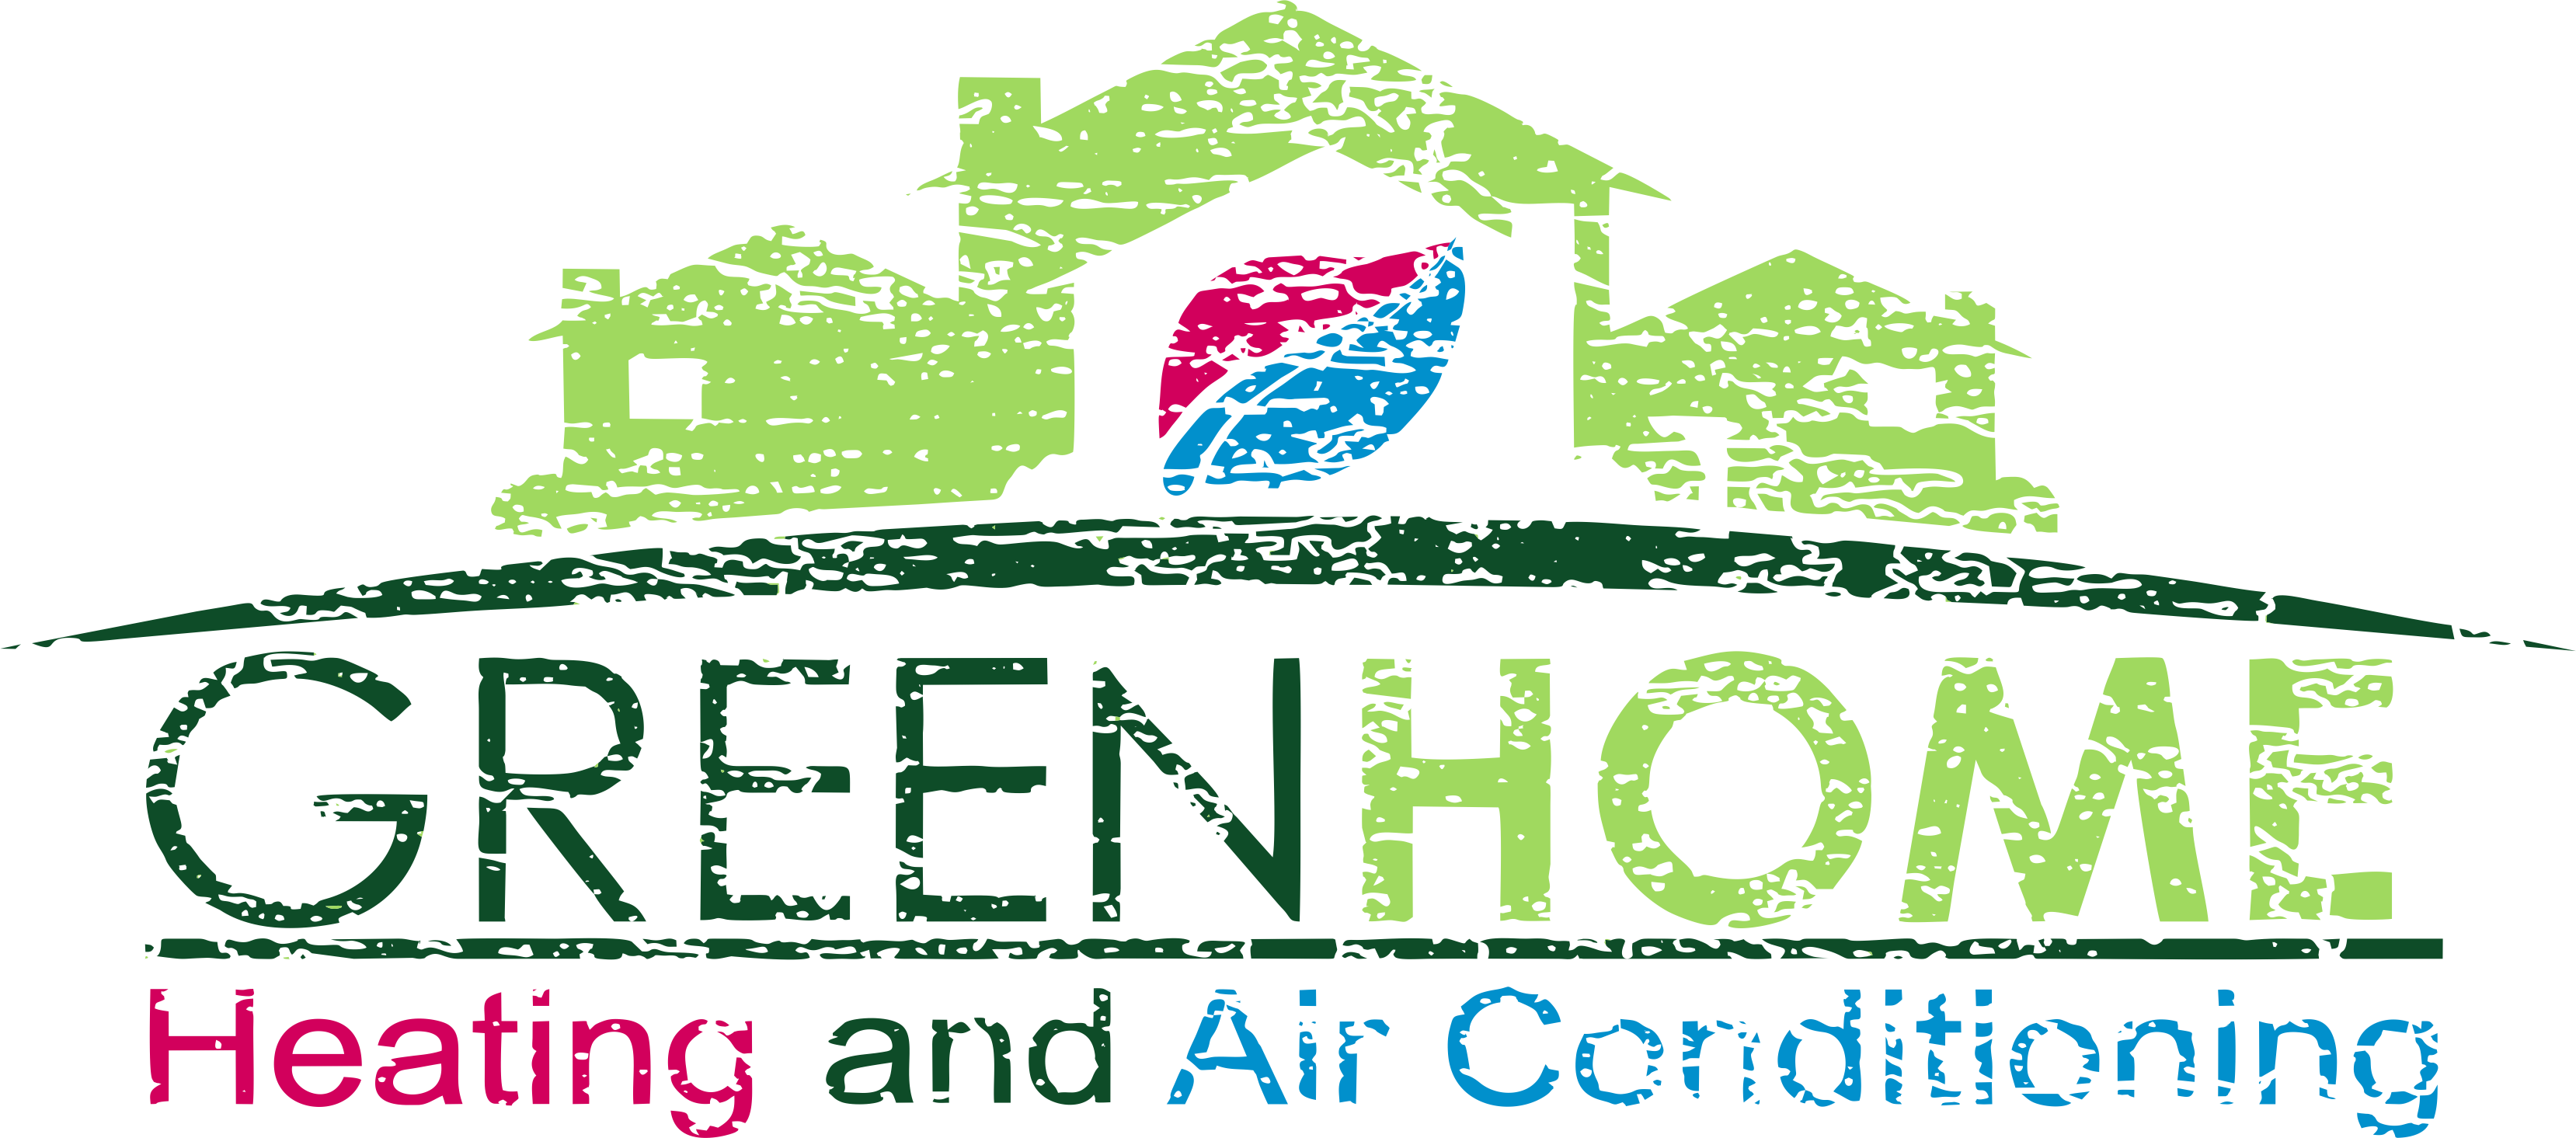 Green Home Energy Solutions, LLC